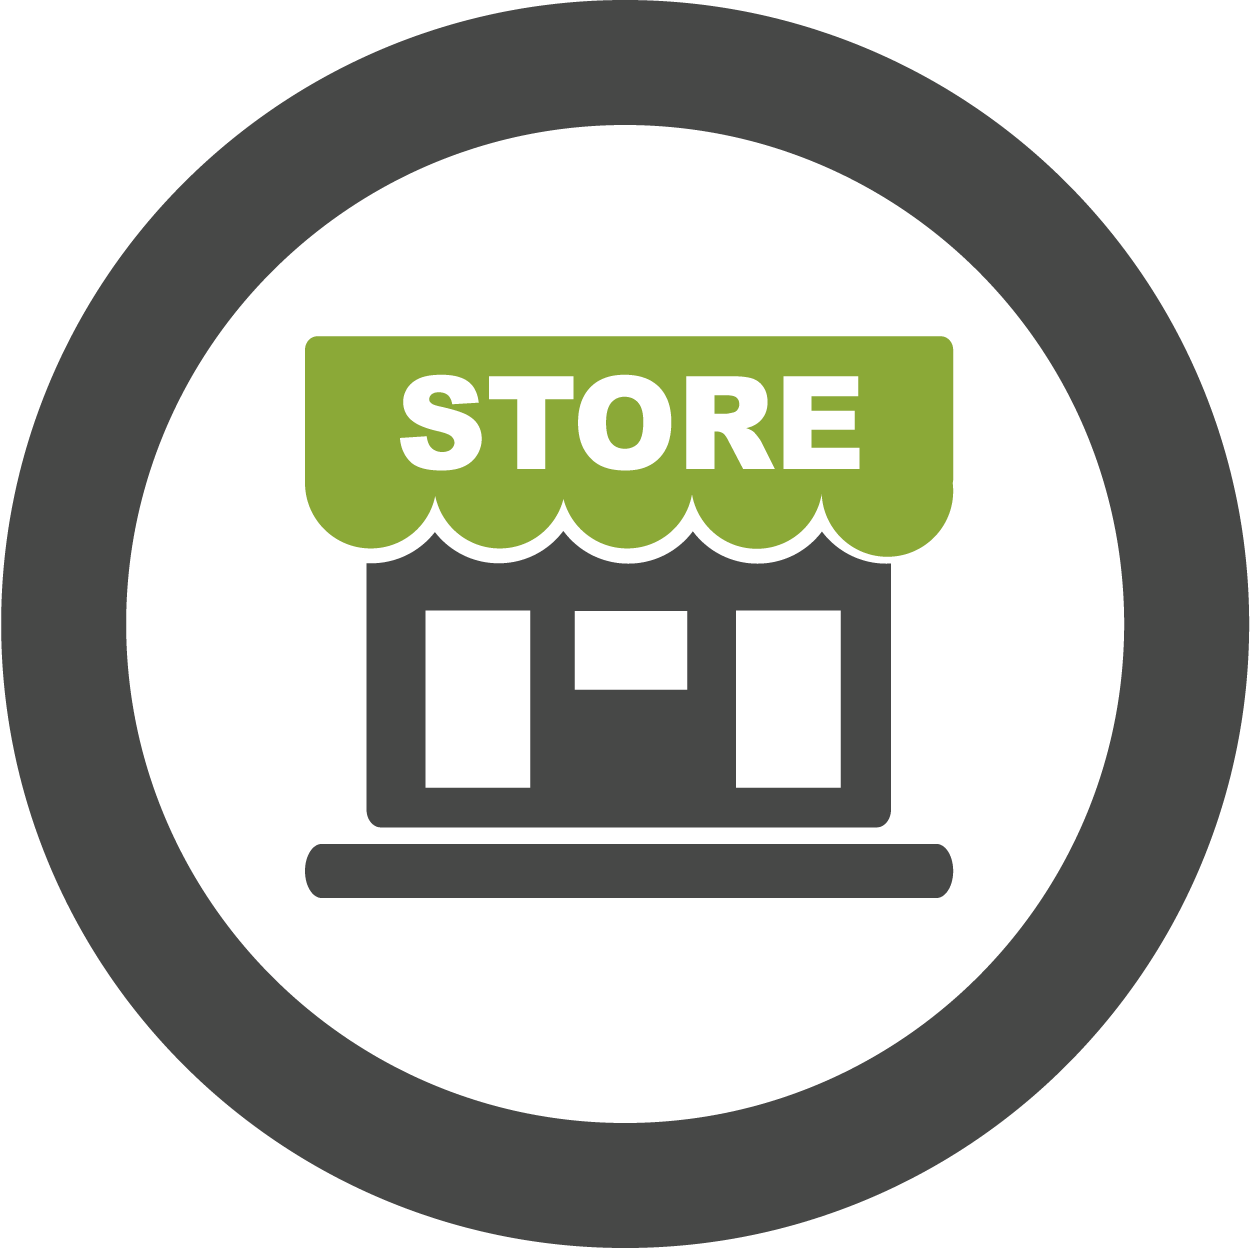 My good store. Магазин иконка. Логотип магазина. Супермаркет пиктограмма. Store значок.